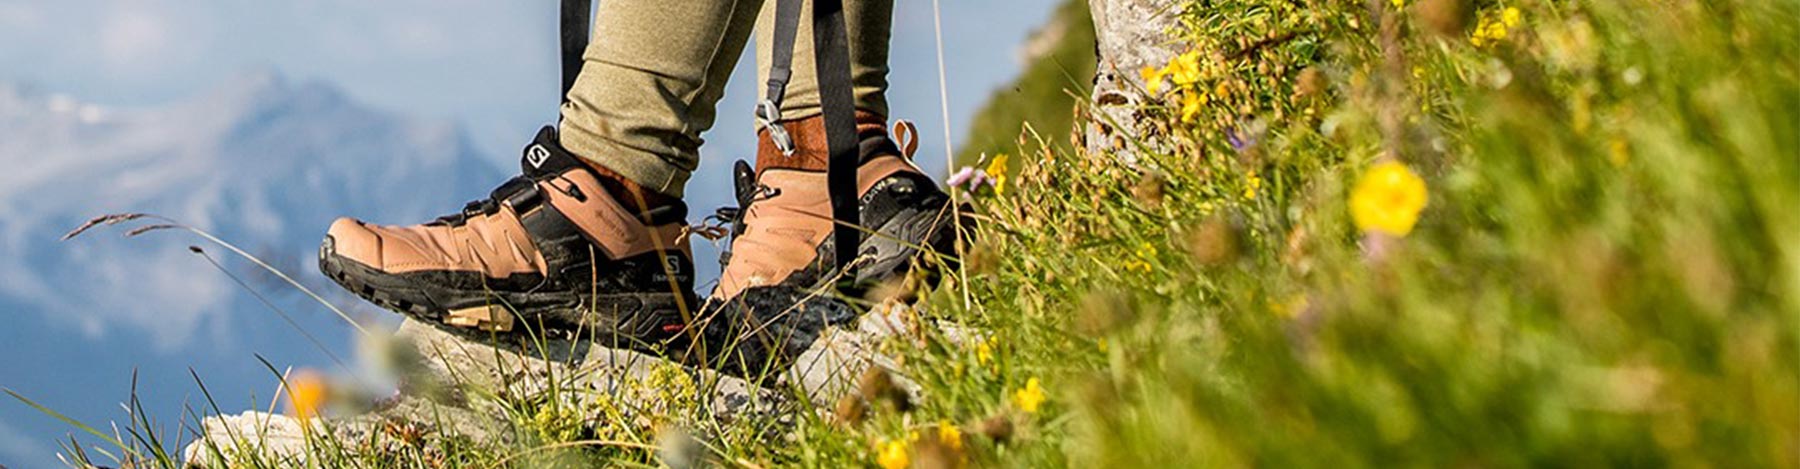 Salomon X Ultra 4 GTX Hiking Shoes